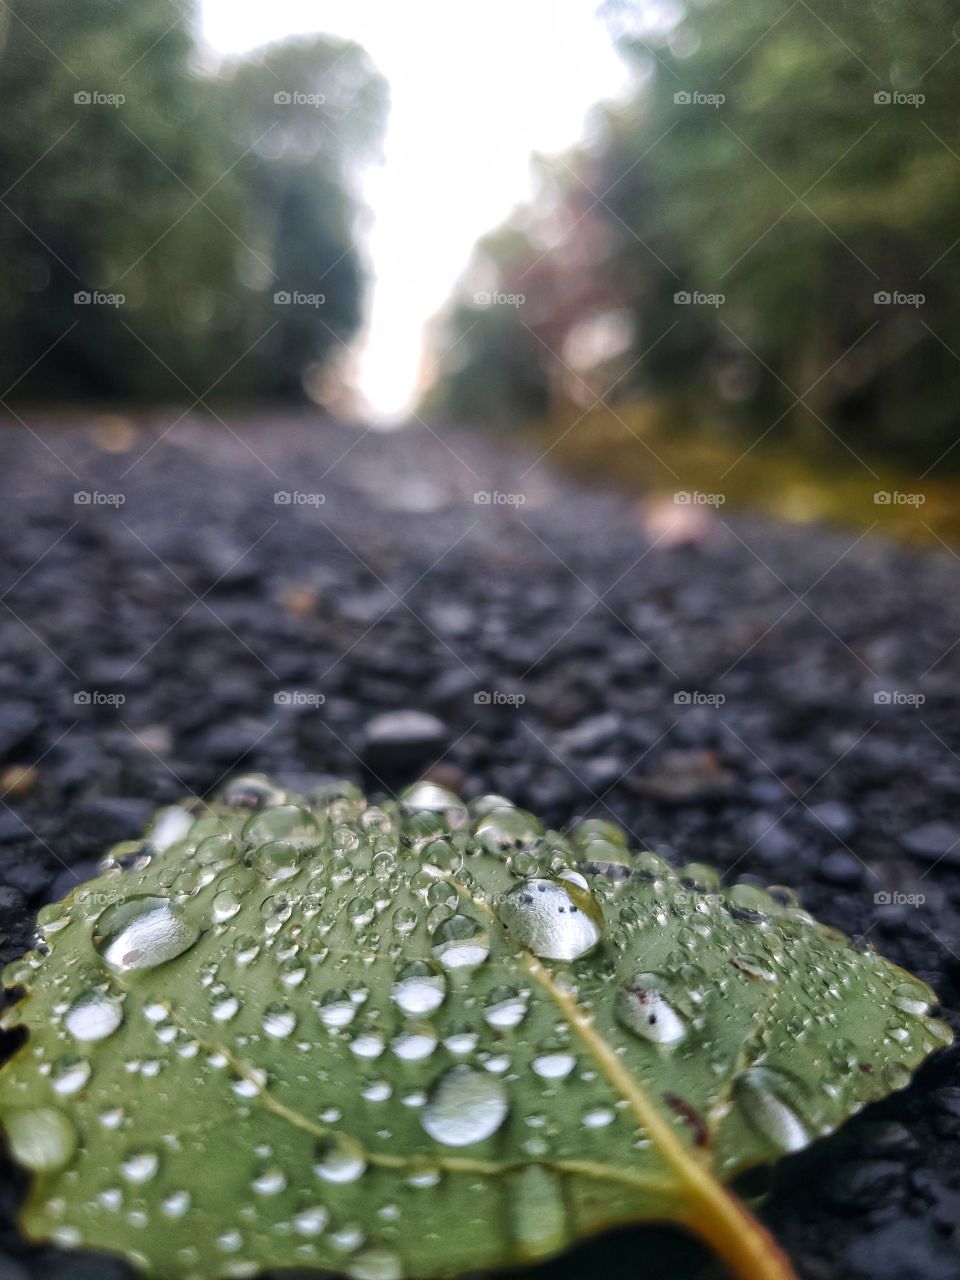 Rainy Days:
rain drops on a leaf